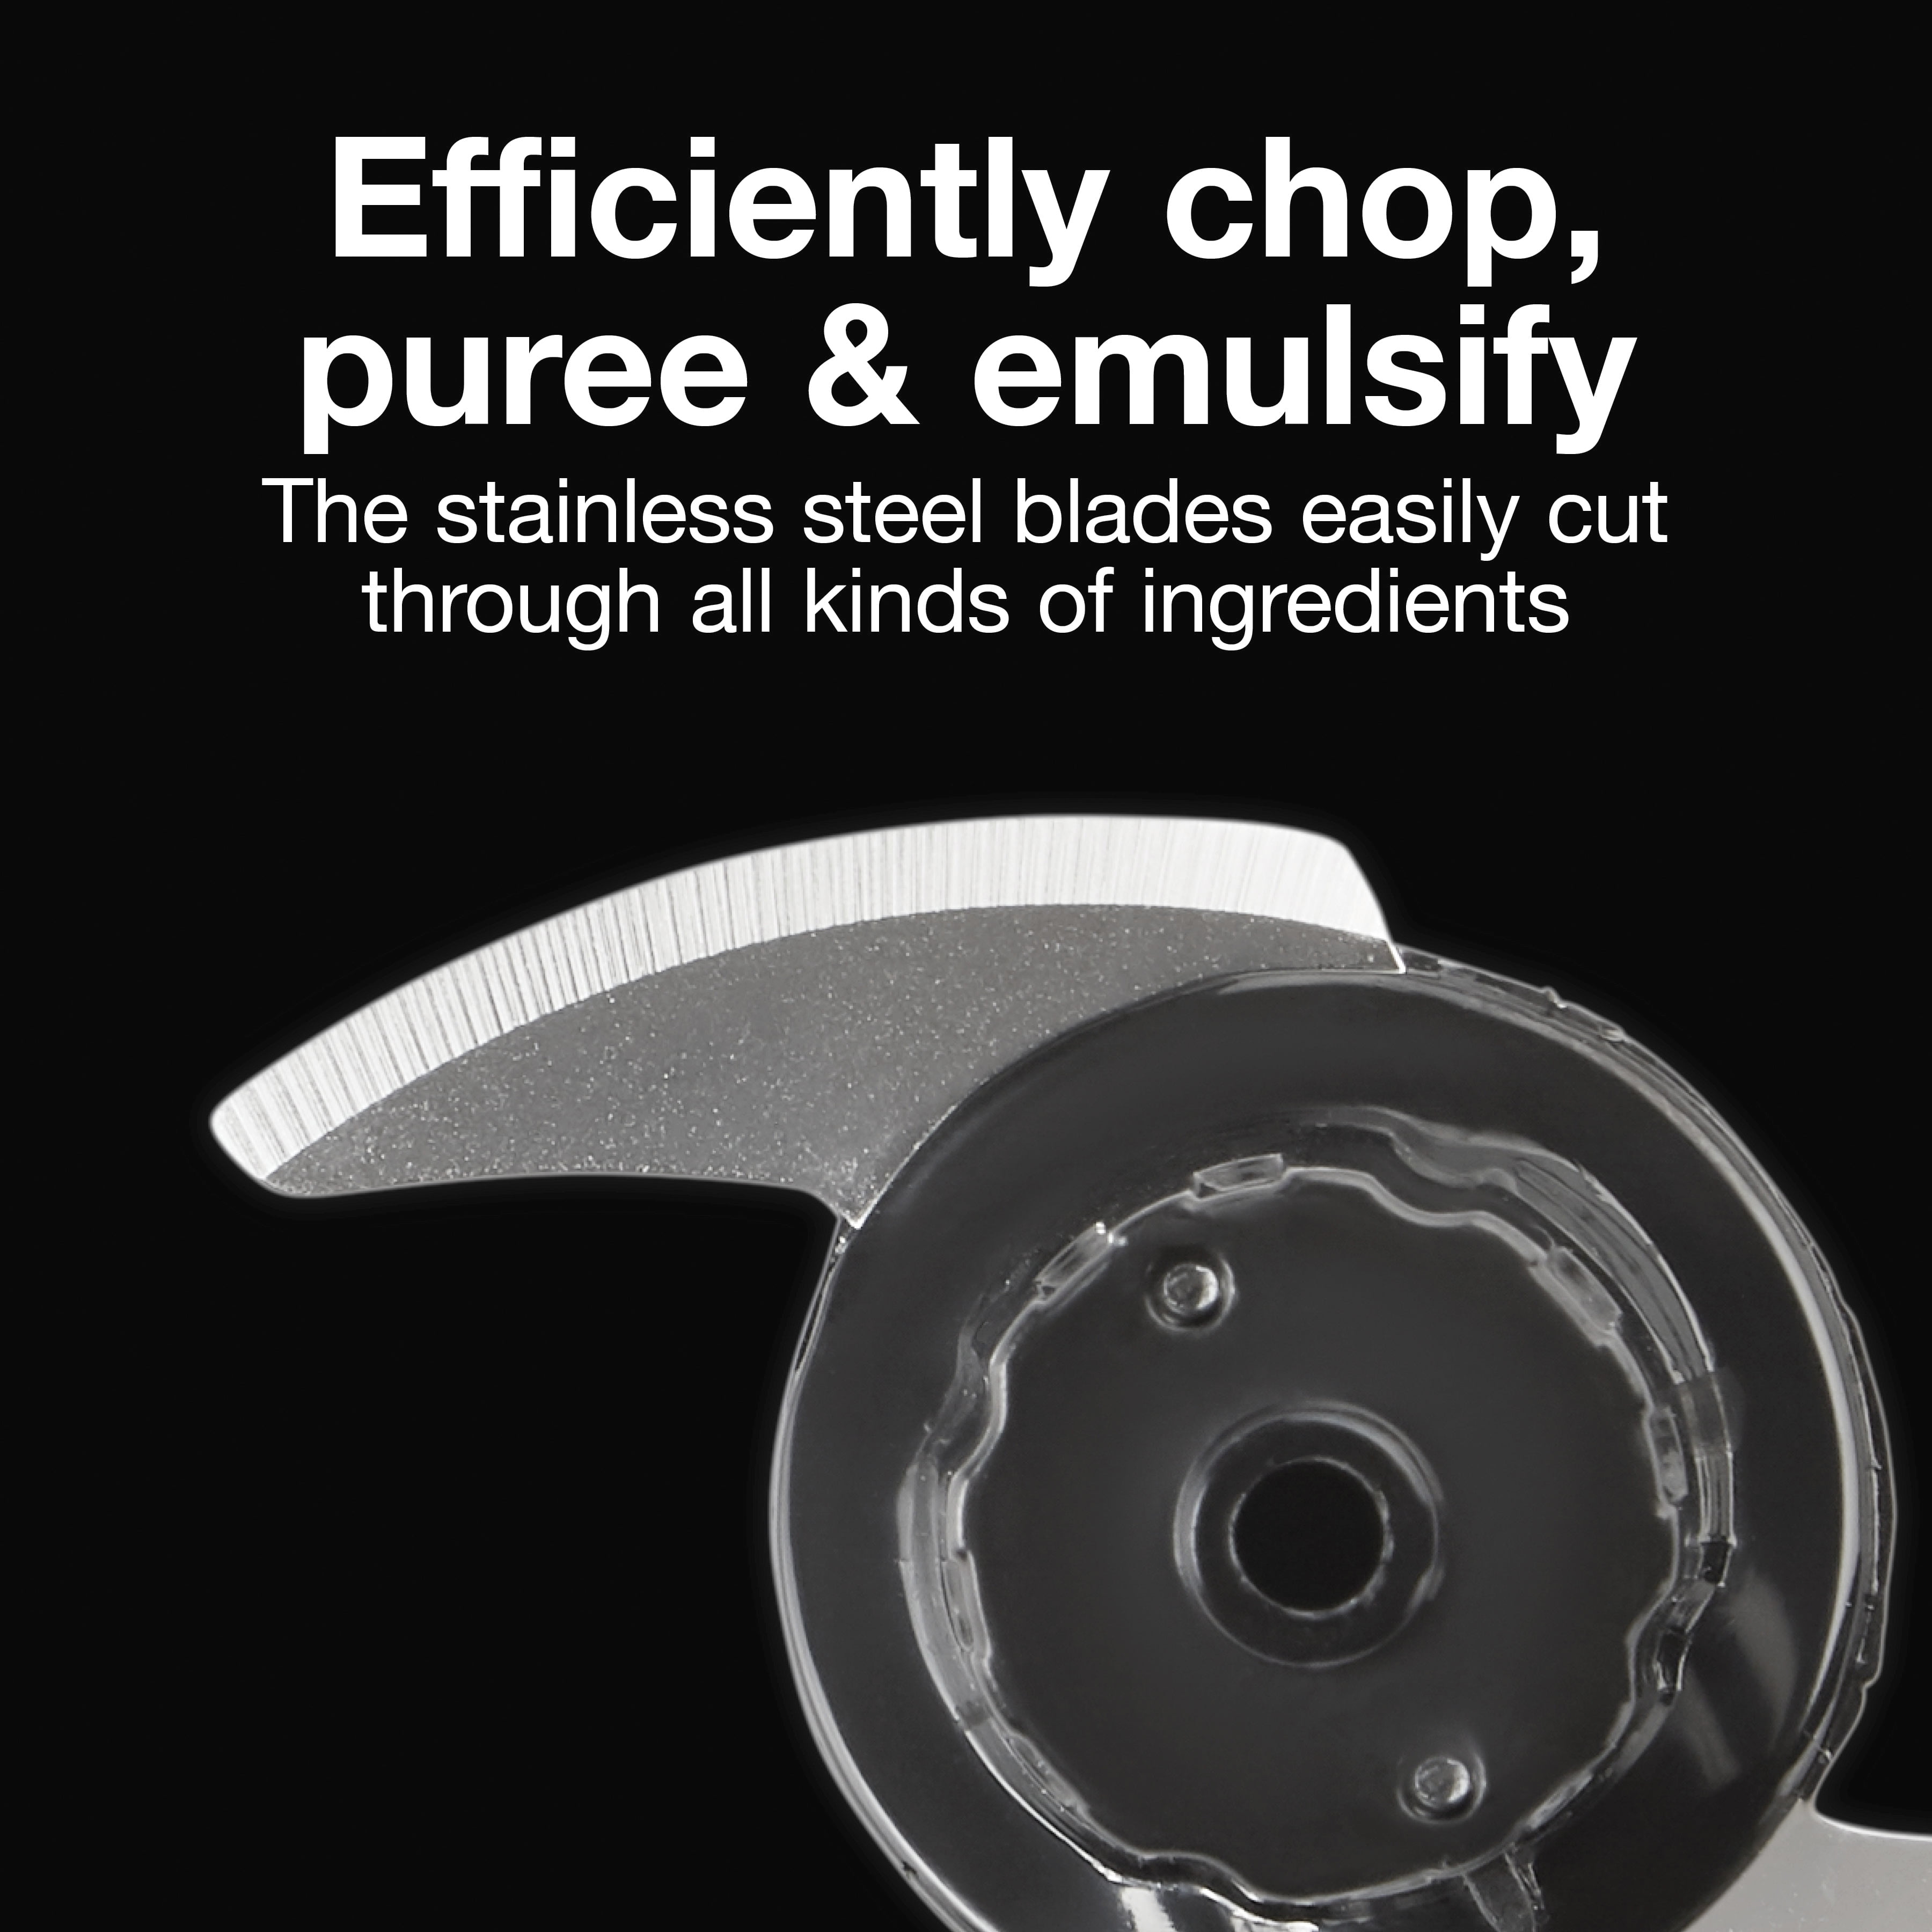 Proctor Silex Electric Food Chopper & Mini Food Processor, 1.5 Cup, Chopping,  Puree & Emulsify, Black, 72507 